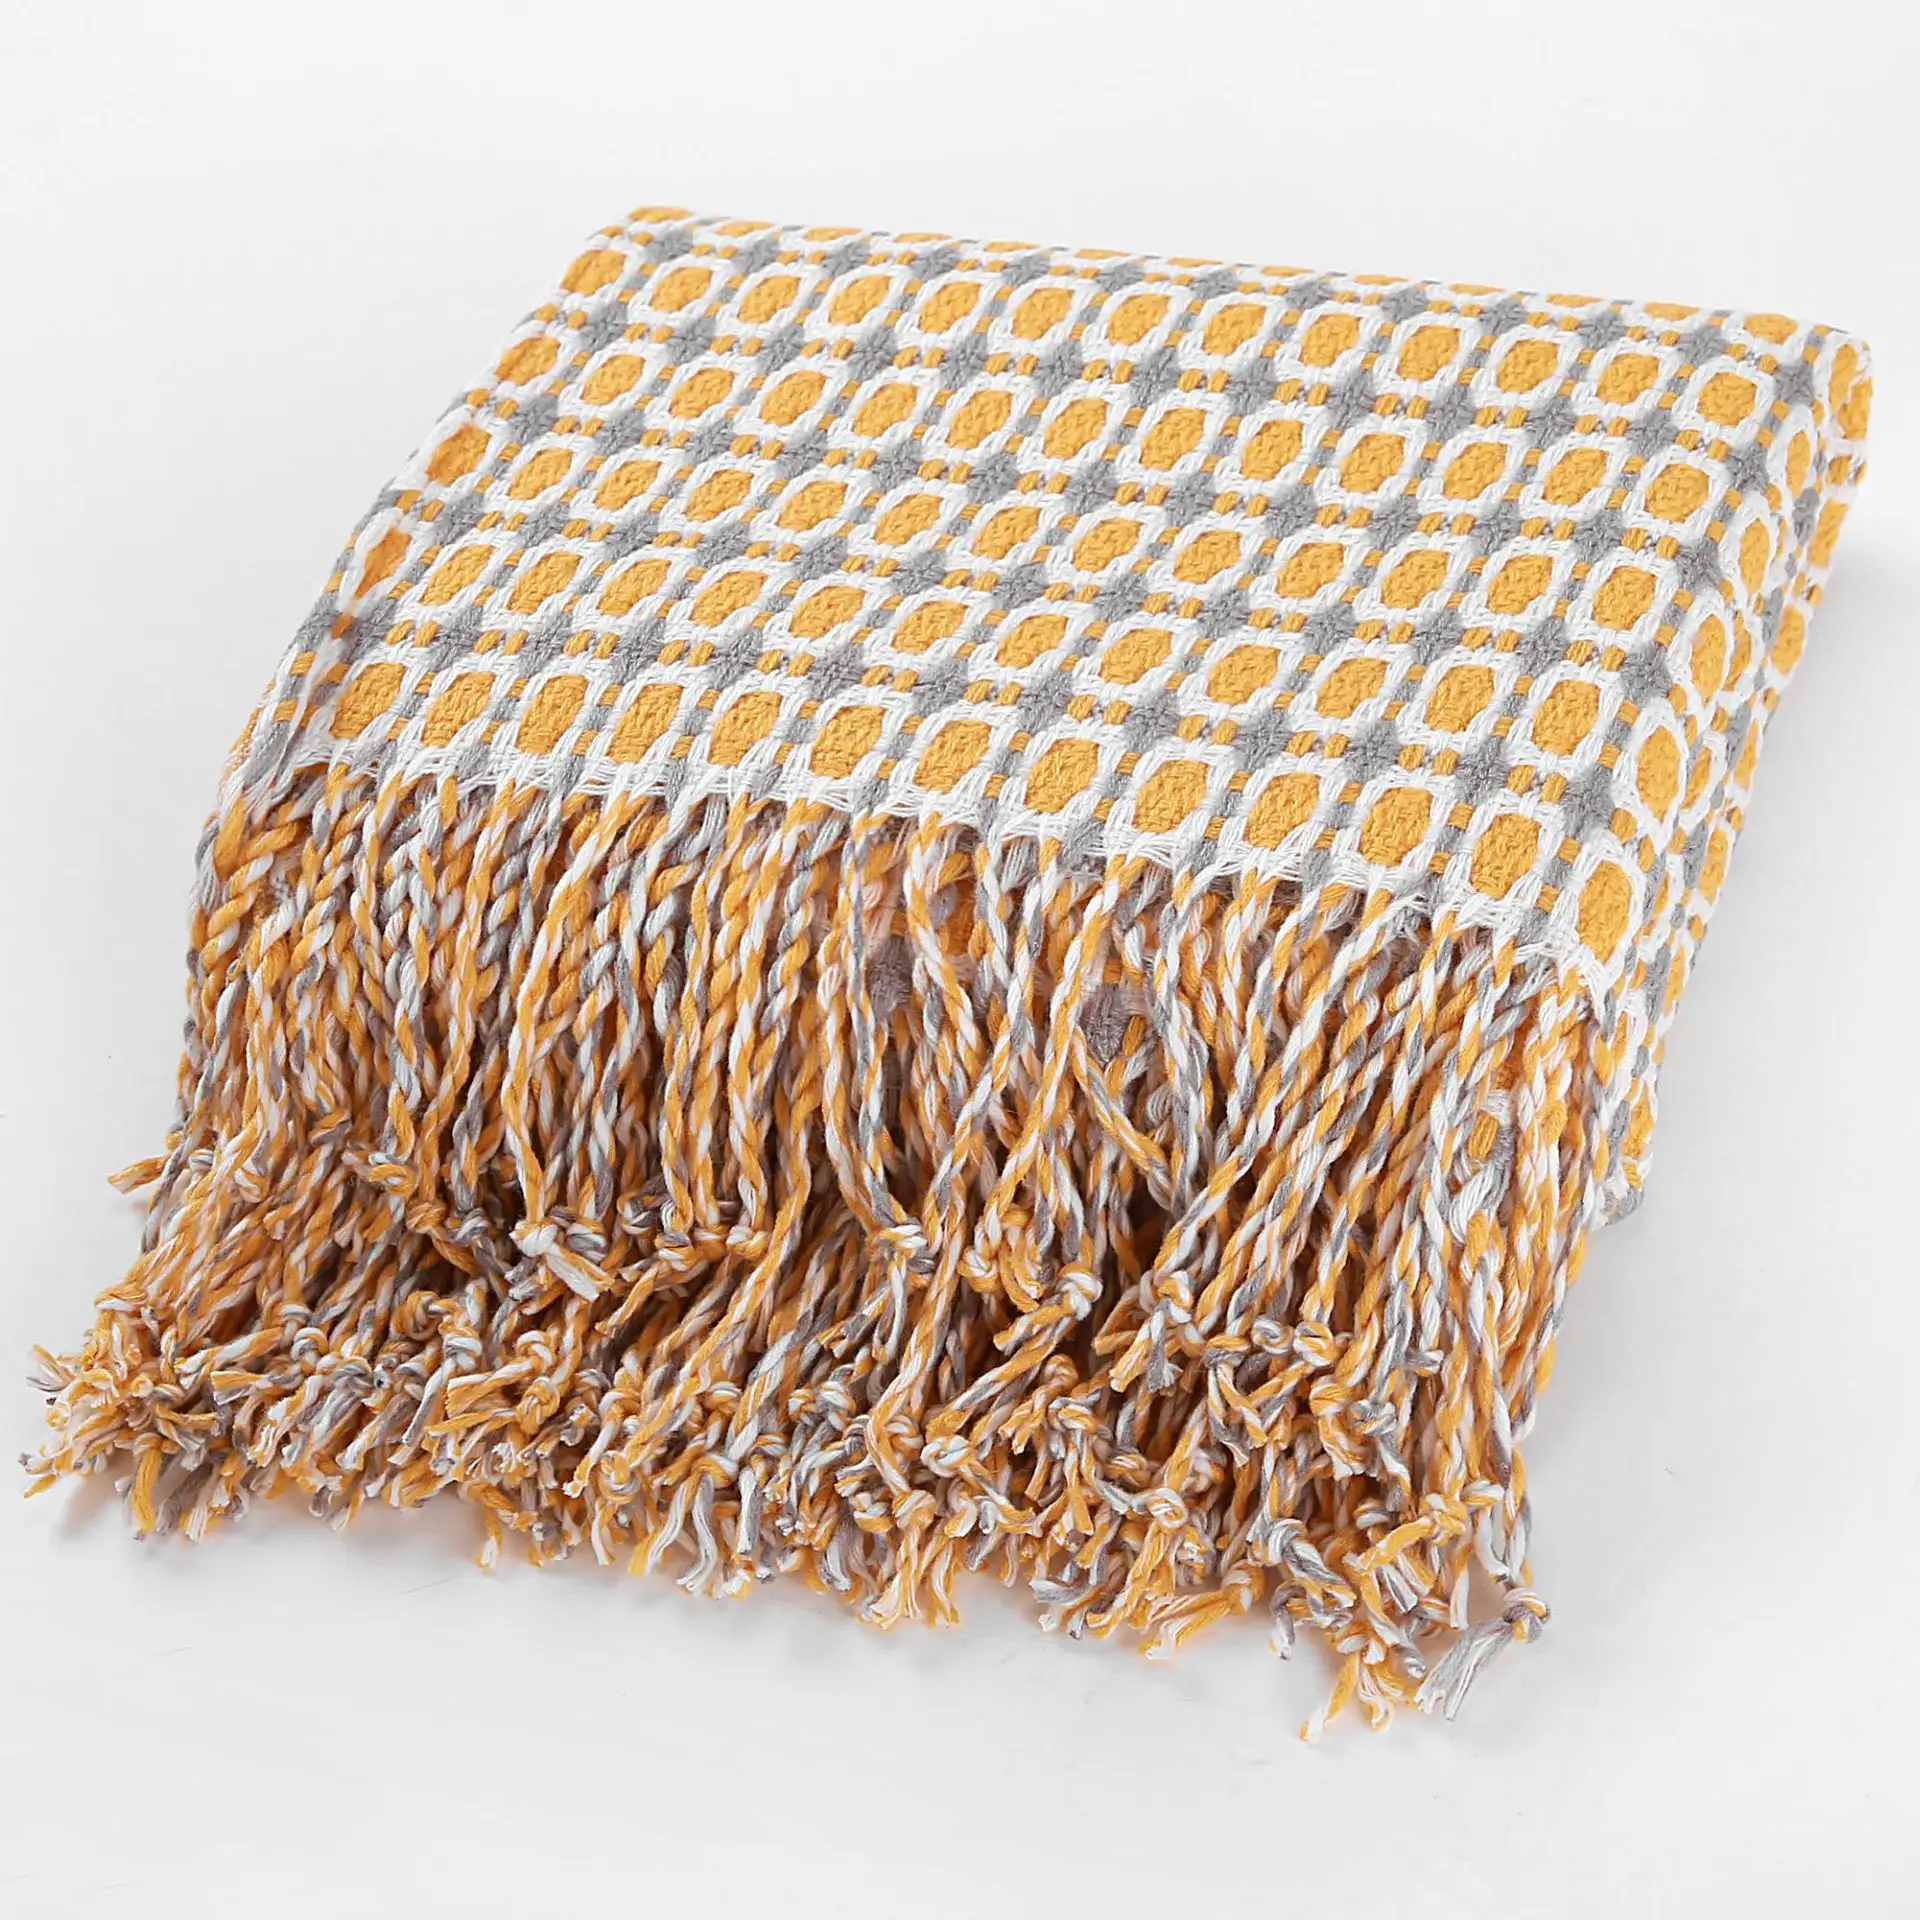 Woven sofa knitting blanket cashmere wool blanket tassel wool plaid woven bed tail blanket